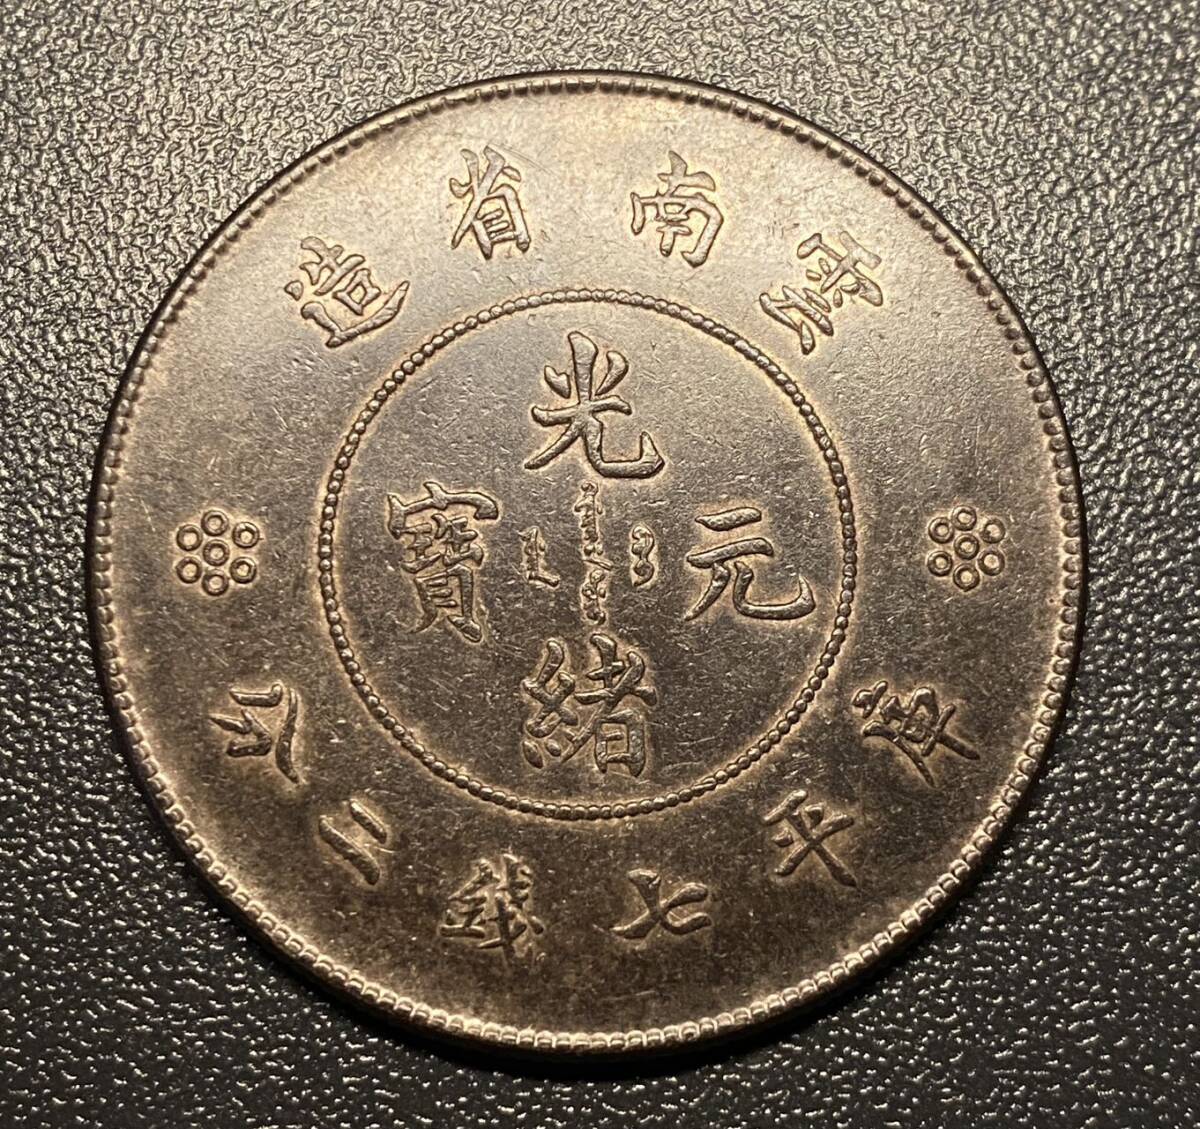 光緒元寶 雲南省造一円銀貨 中国古銭 竜 コイン 硬貨 古銭 美品 レアの画像1